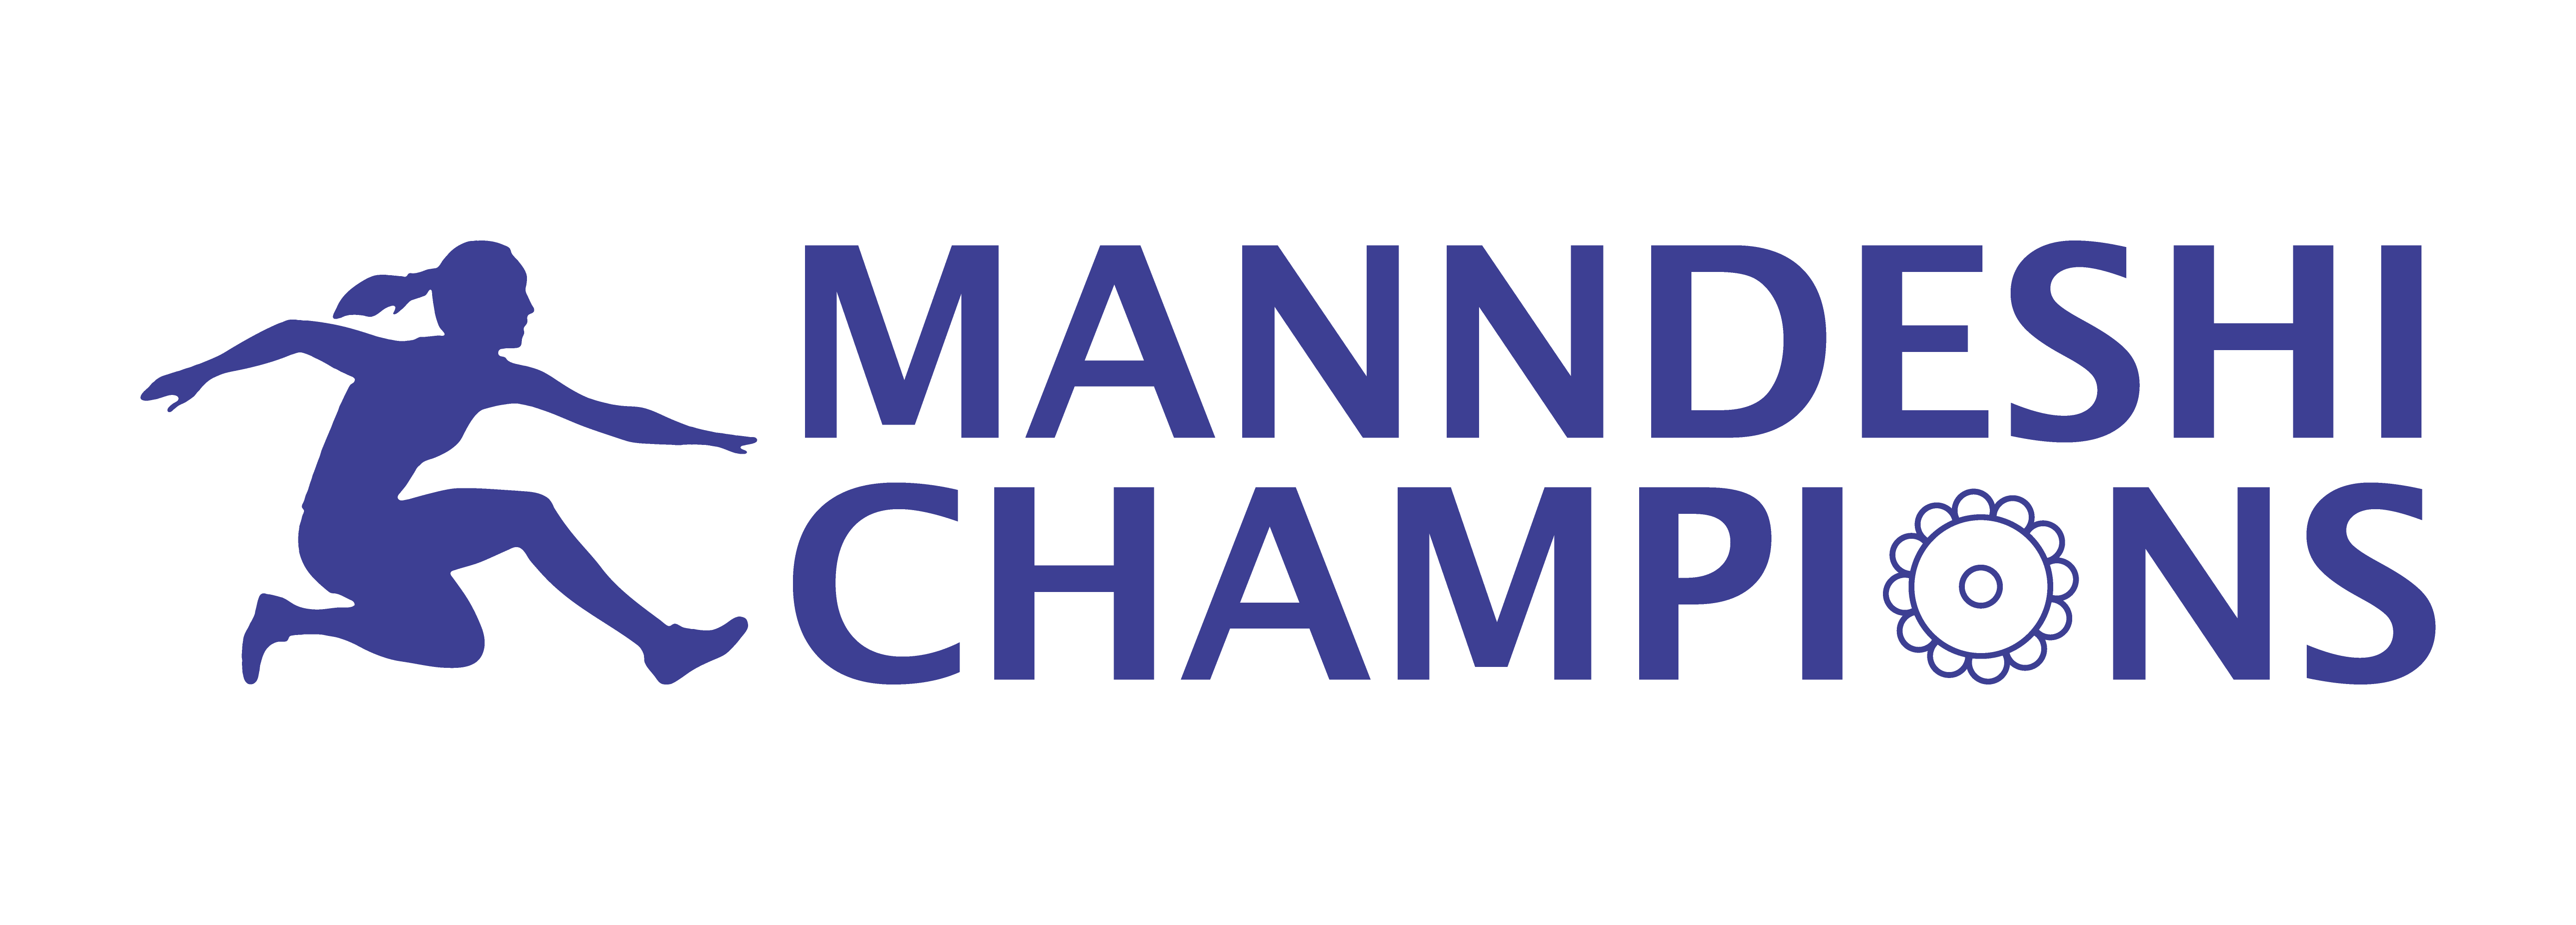 Manndeshi Champions